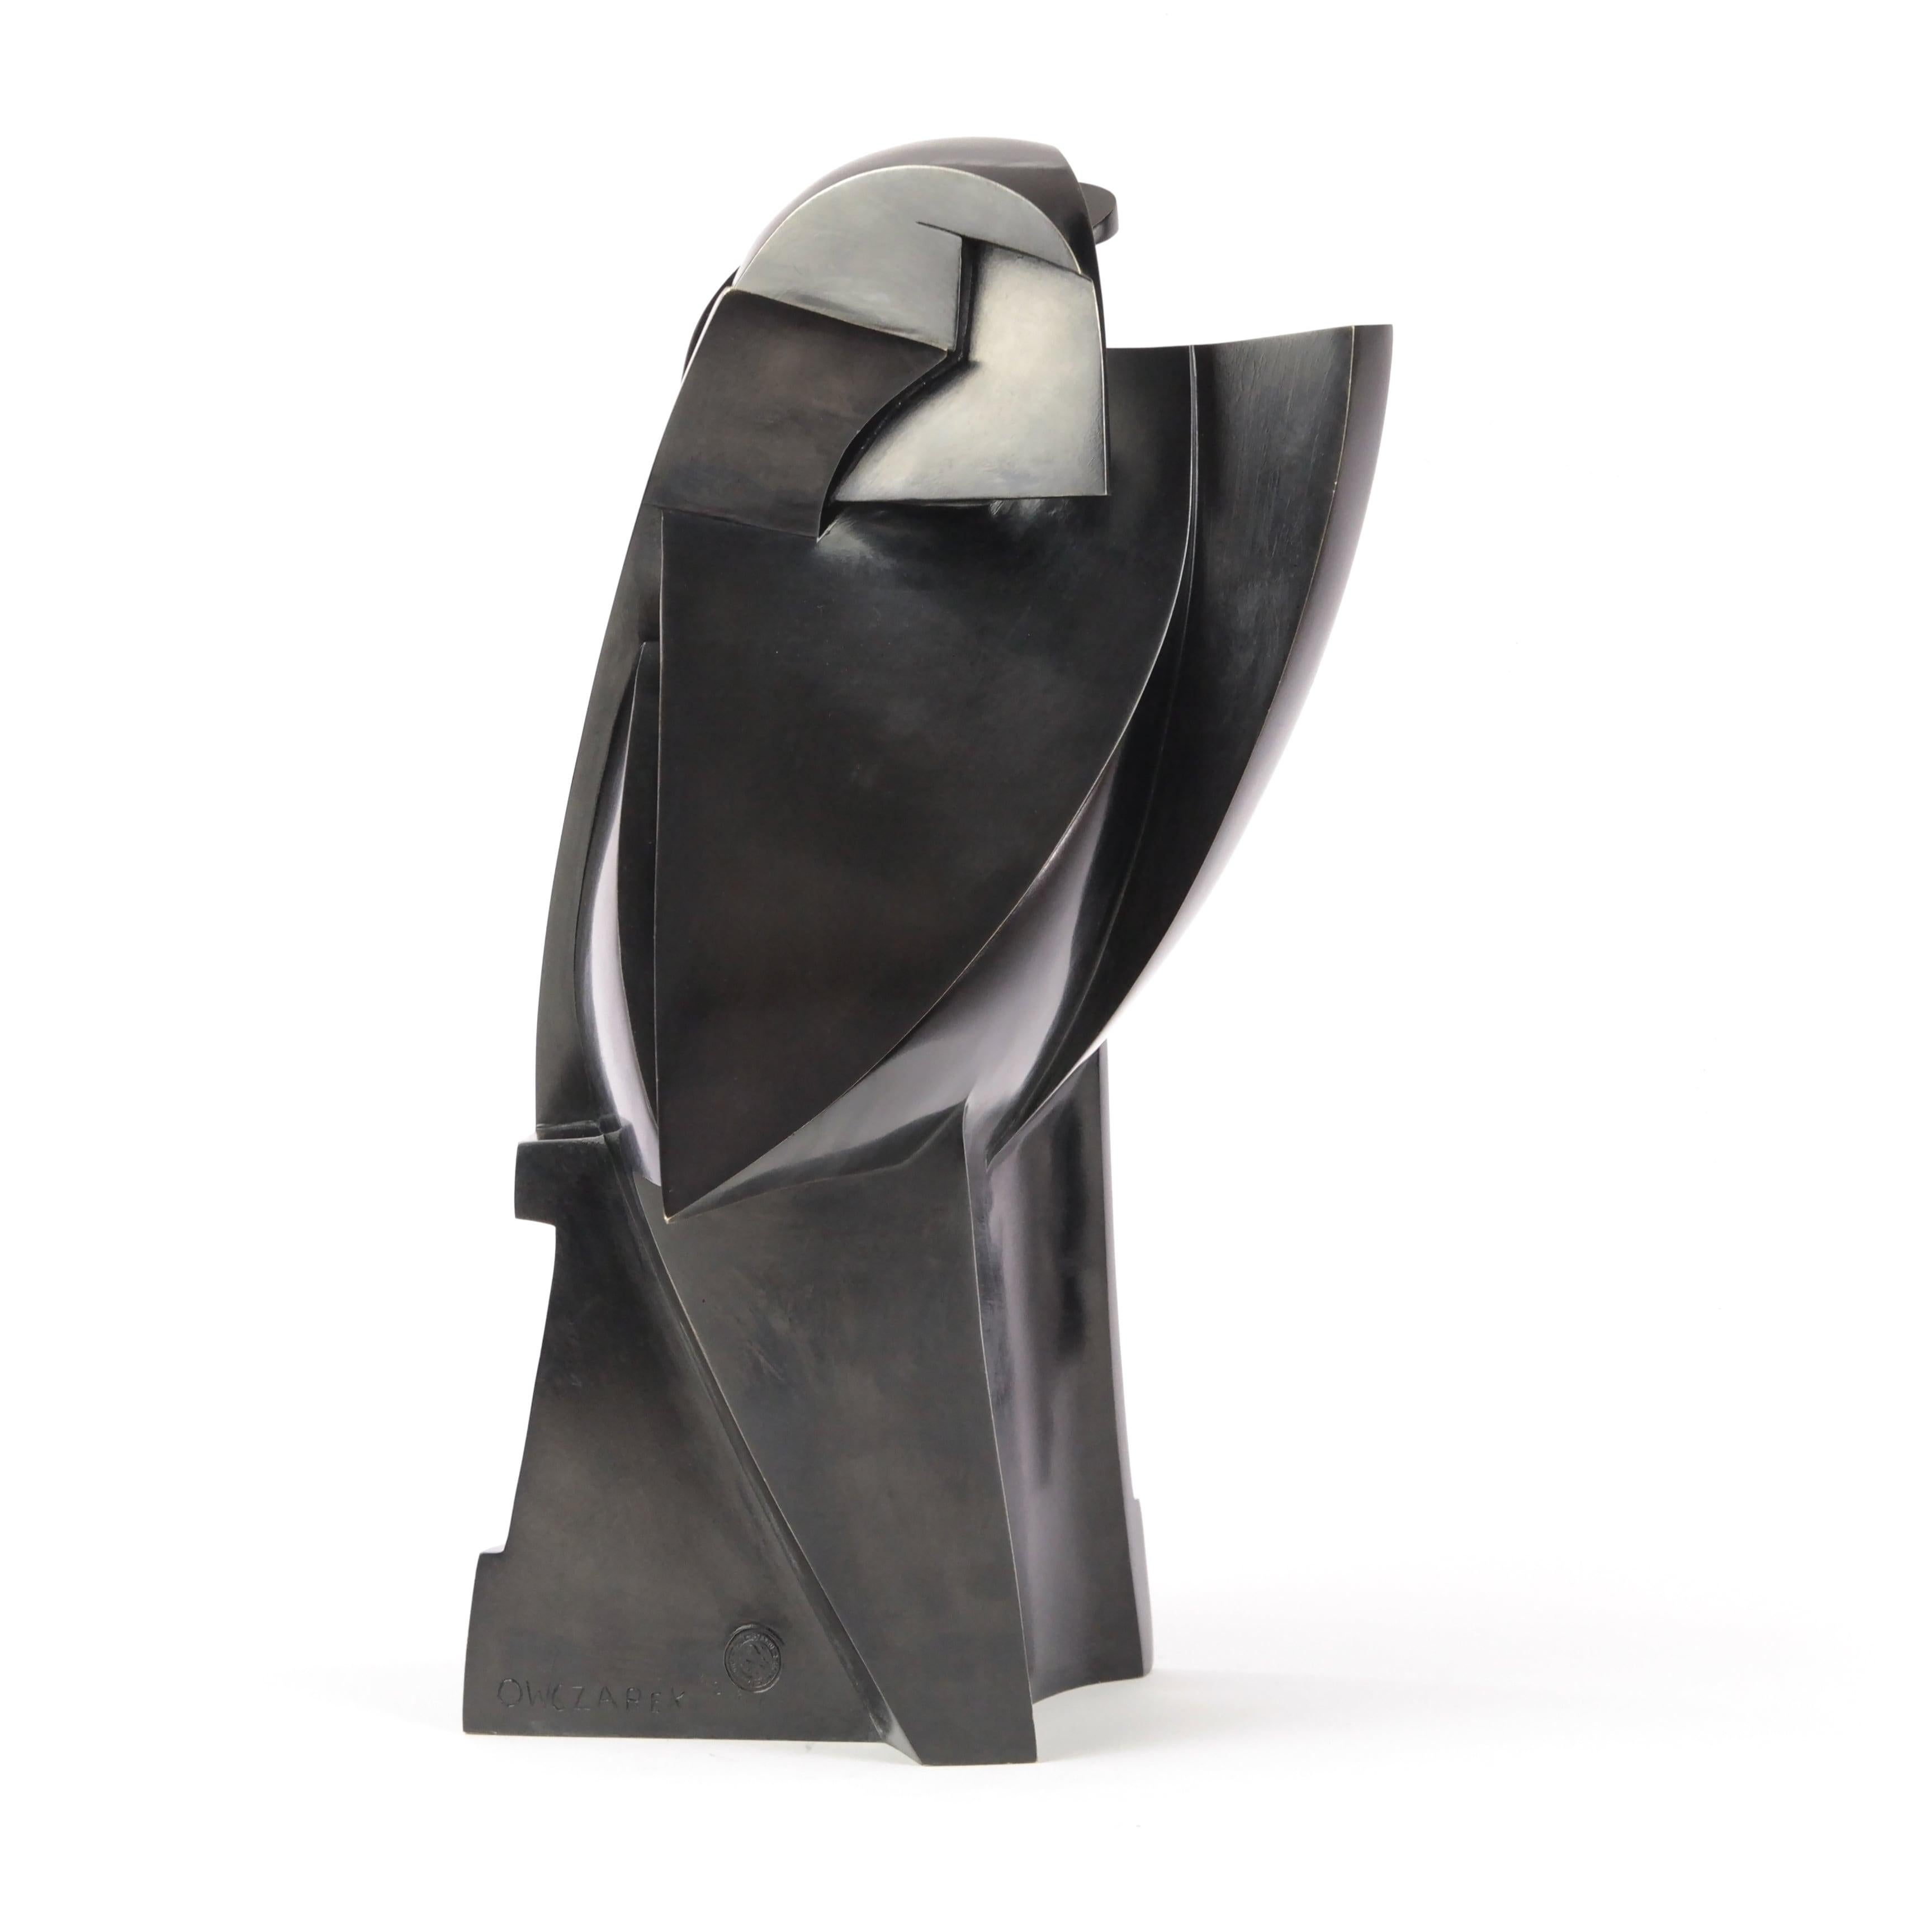 Taorakio by Jacques Owczarek - Animal bronze sculpture of a pelican, bird For Sale 3